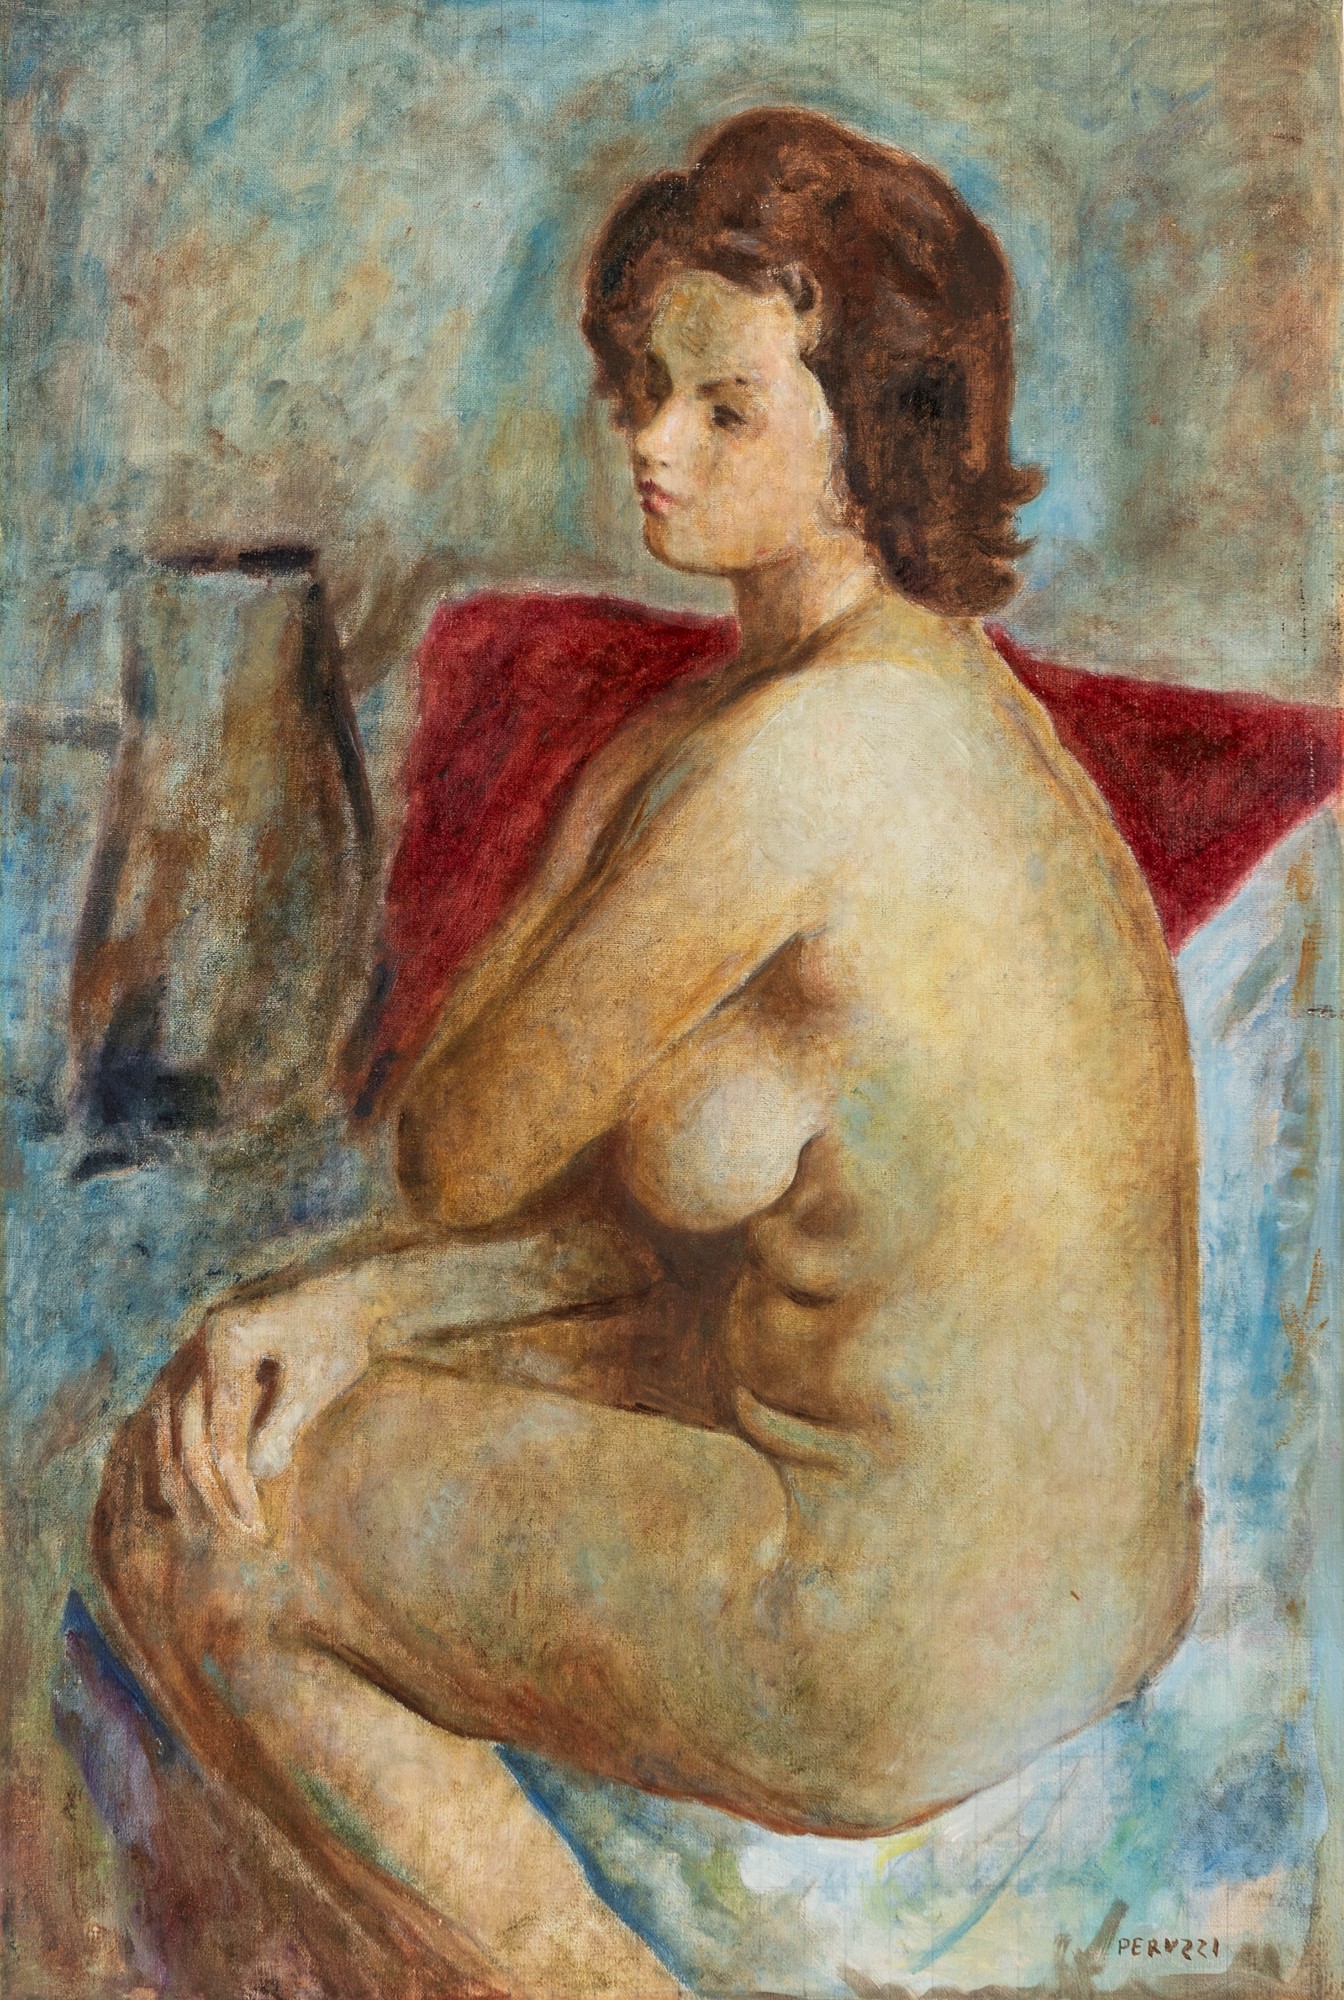 Cesare Peruzzi (Montelupone 1894-Recanati 1995) - Female nude